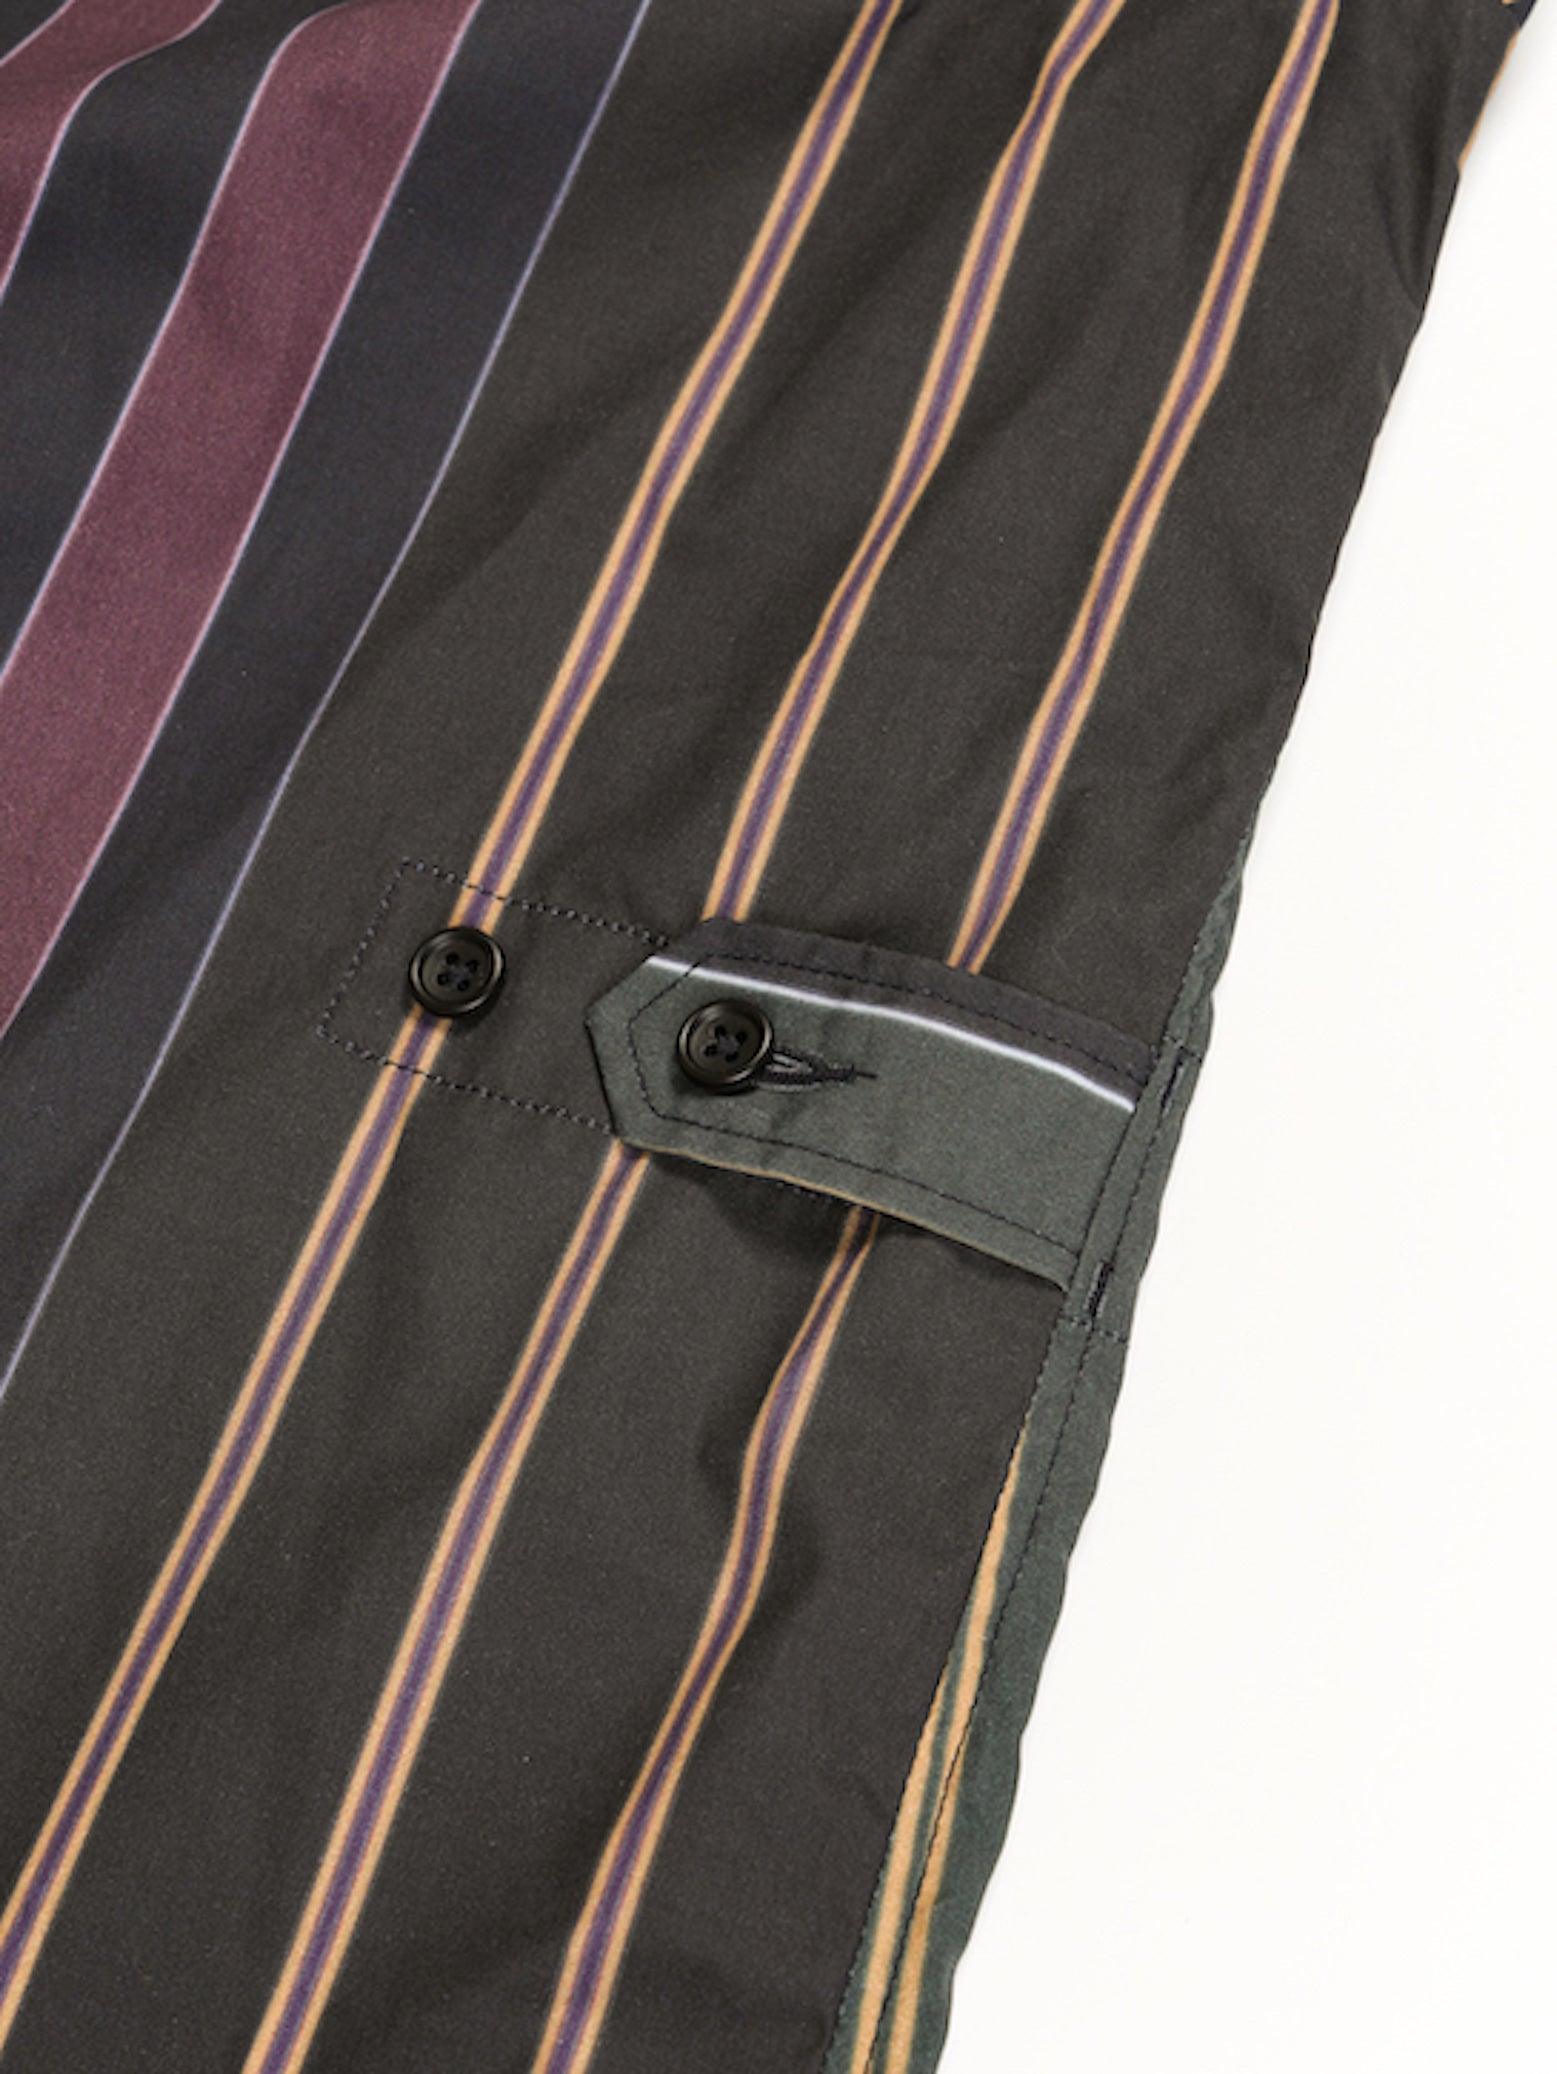 Loiter Jacket - Multi Color Regimental Stripe